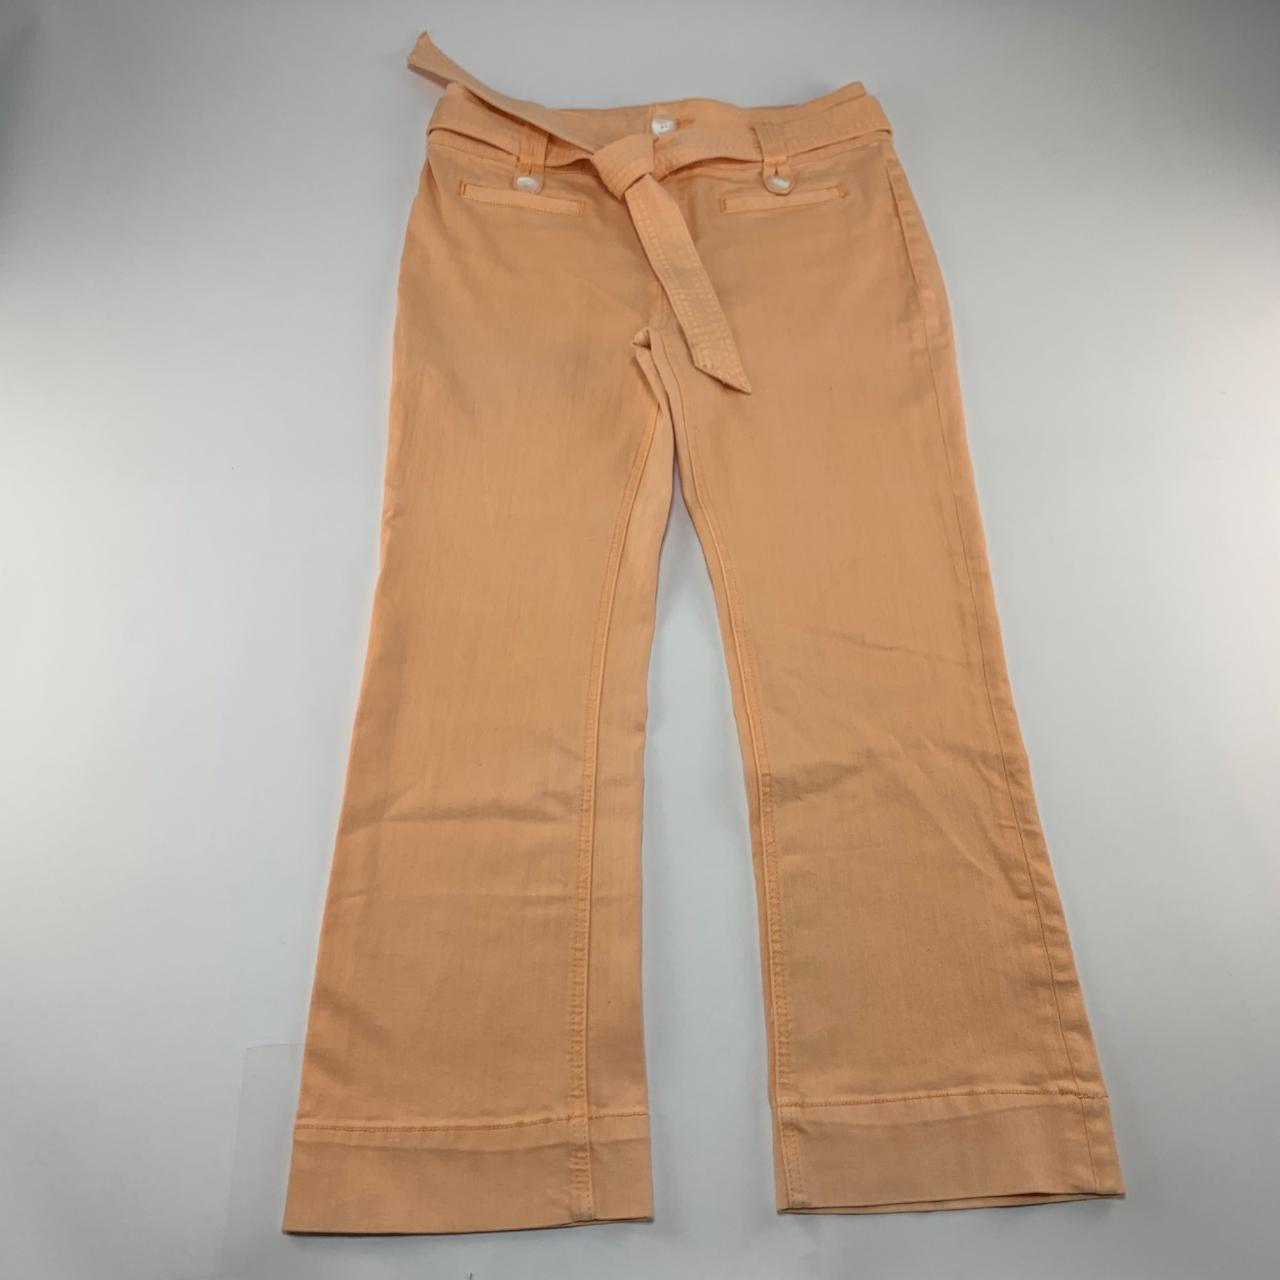 Anthropologie Pilcro Brown High Rise Skinny Corduroy Pants Sz 29 NEW